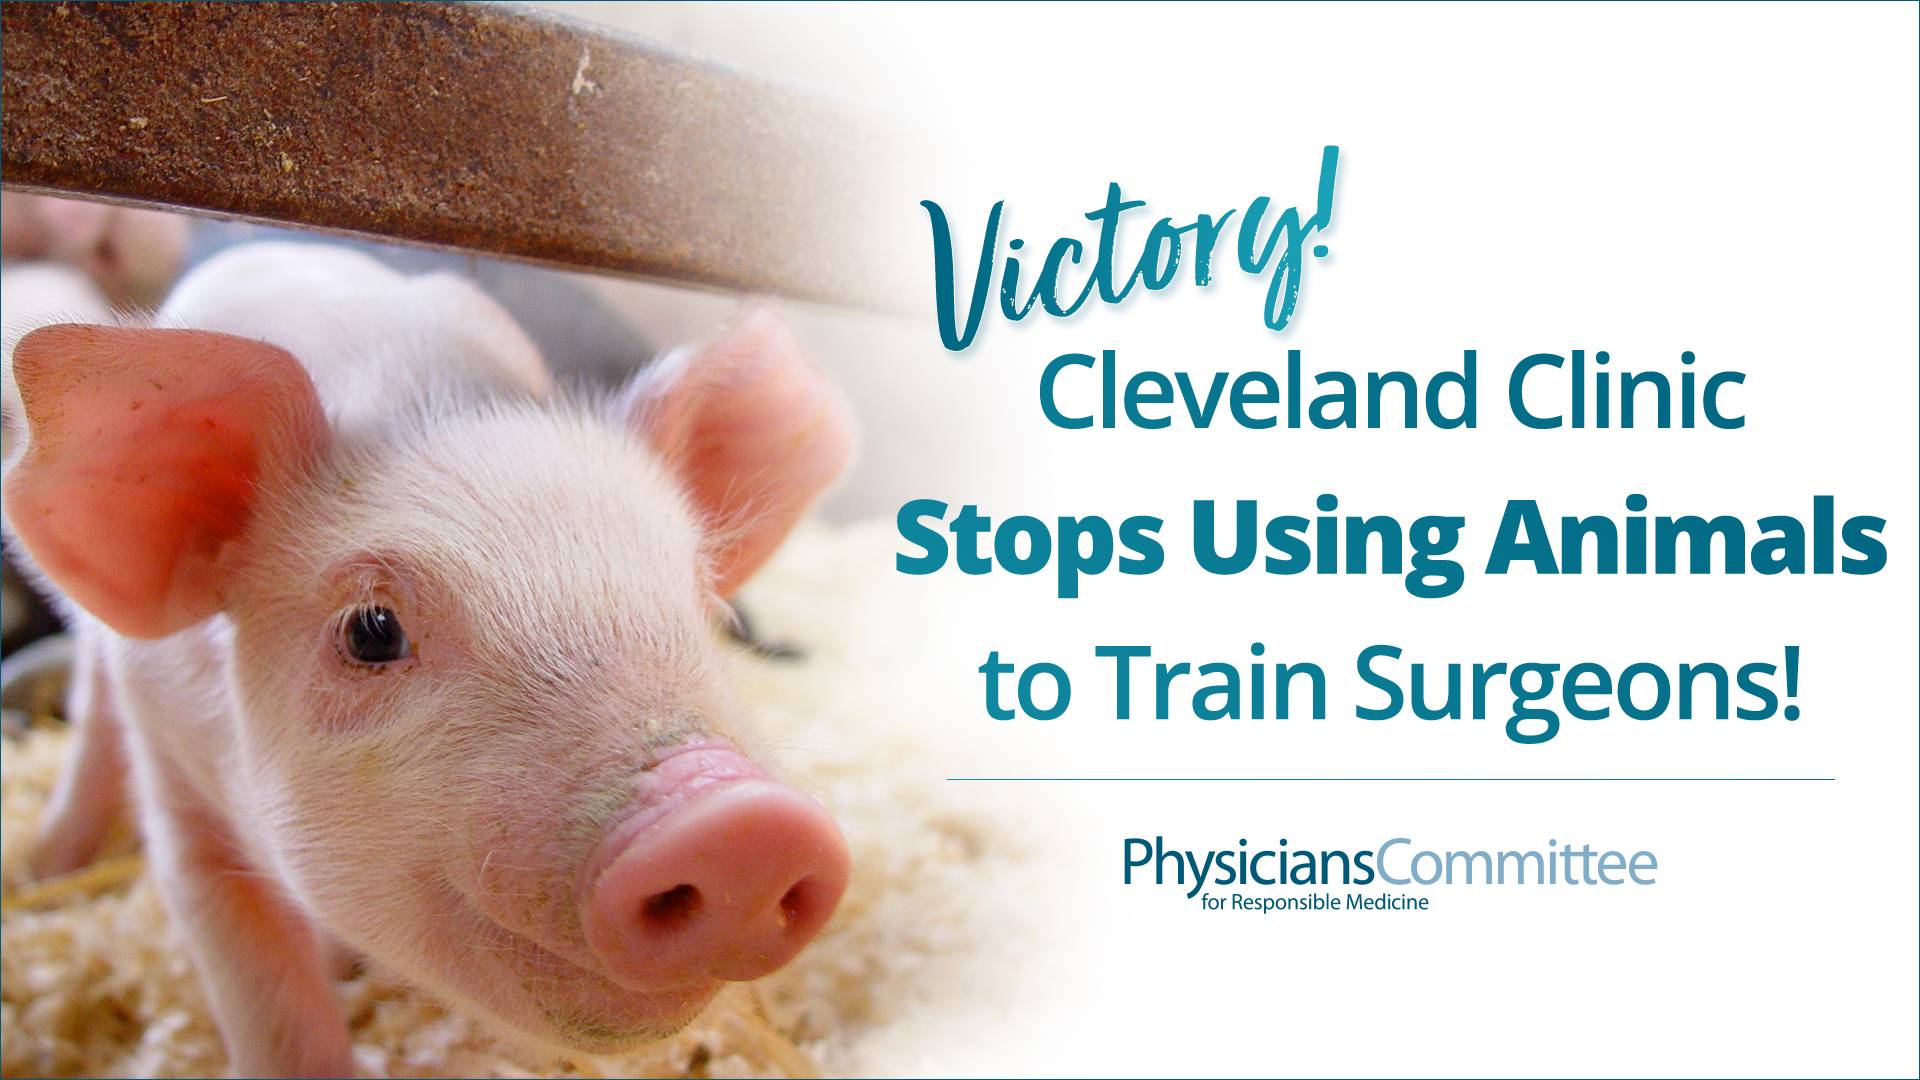 Two More Surgeon Training Programs End Live Animal Use!